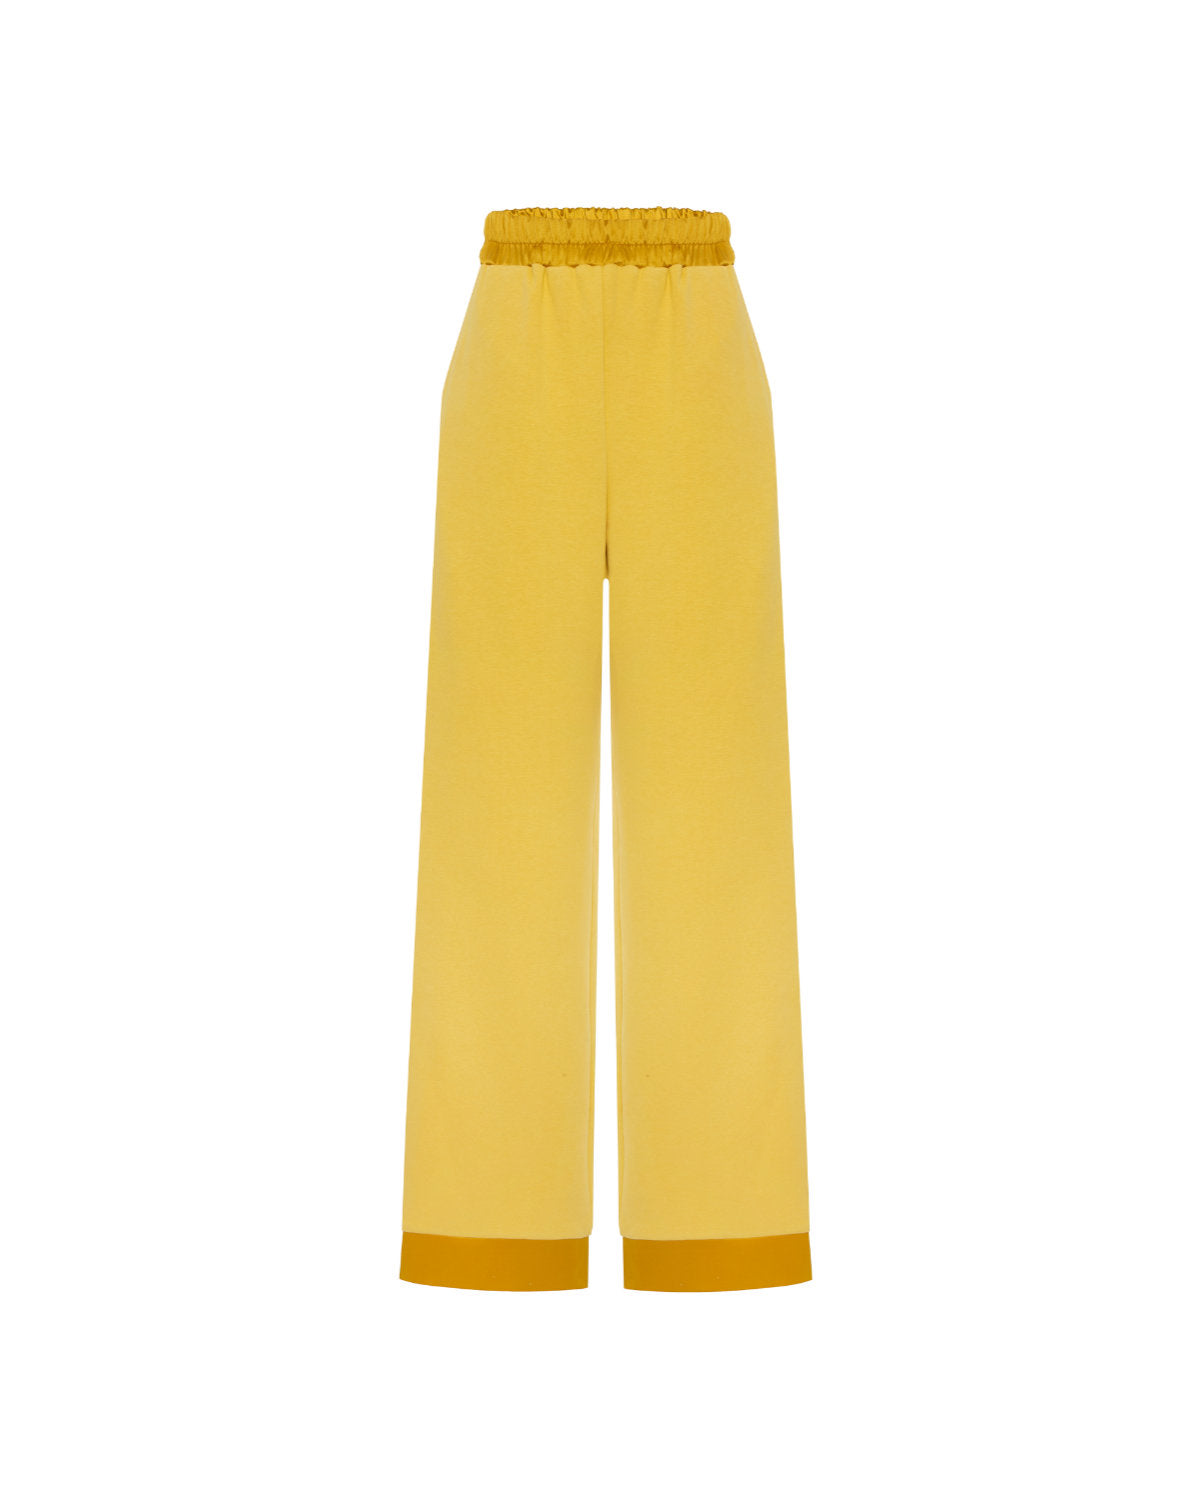 03 Track pants yellow